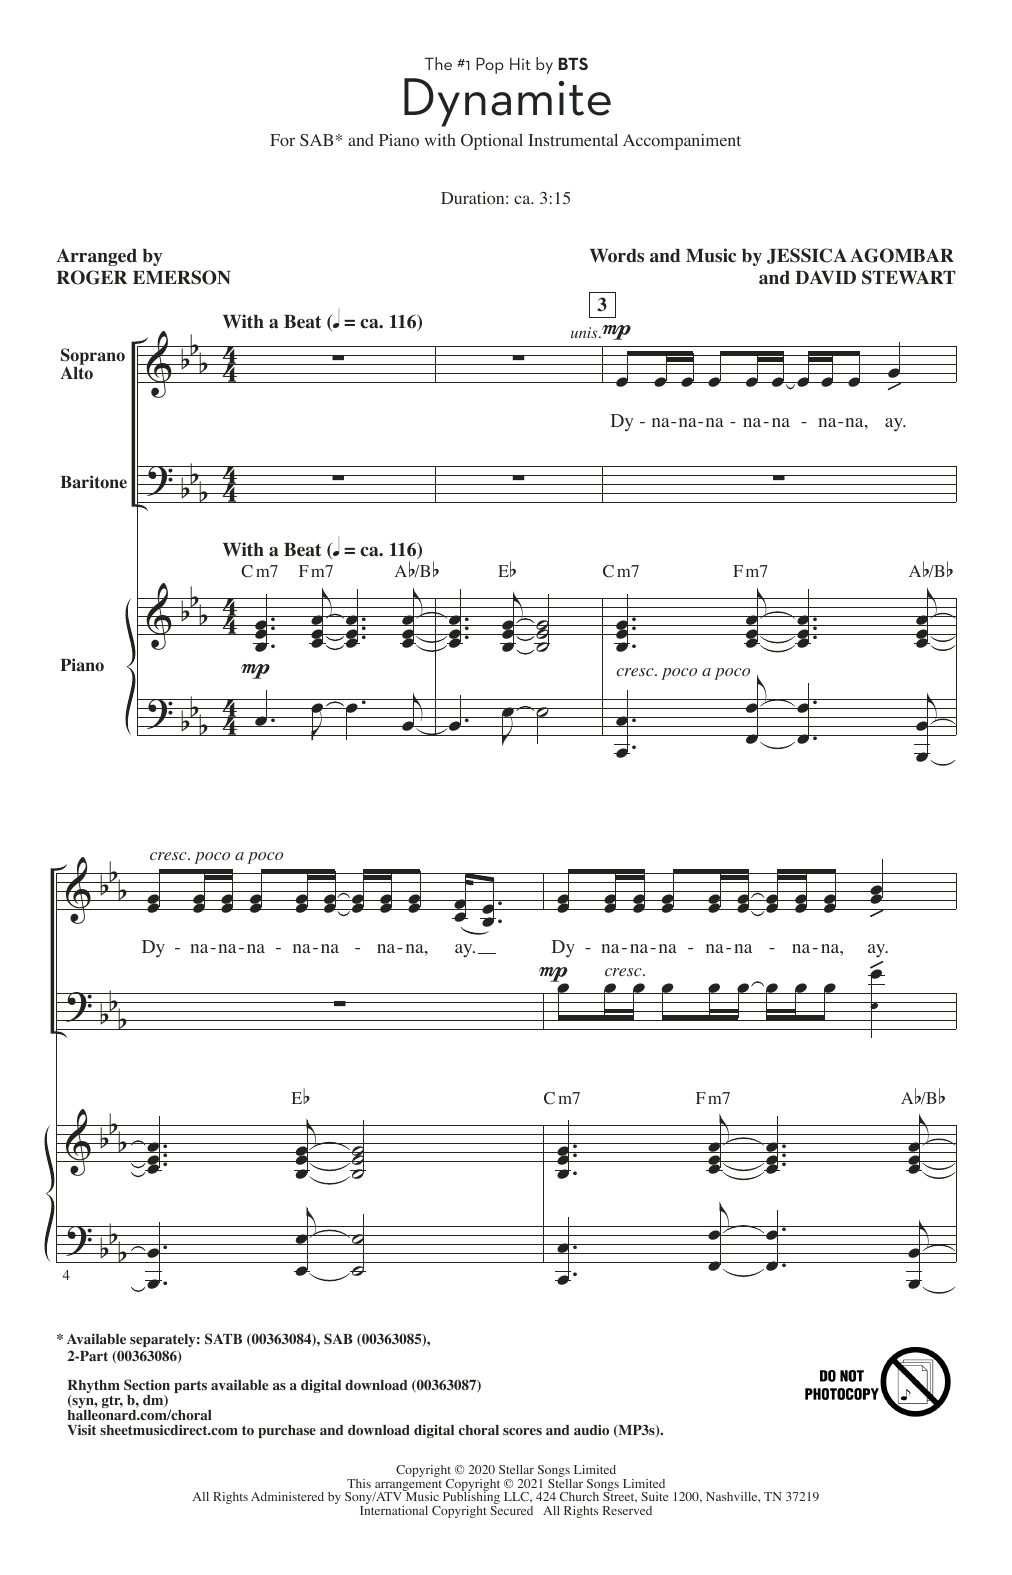 BTS Dynamite (arr. Roger Emerson) Sheet Music Notes & Chords for SAB Choir - Download or Print PDF